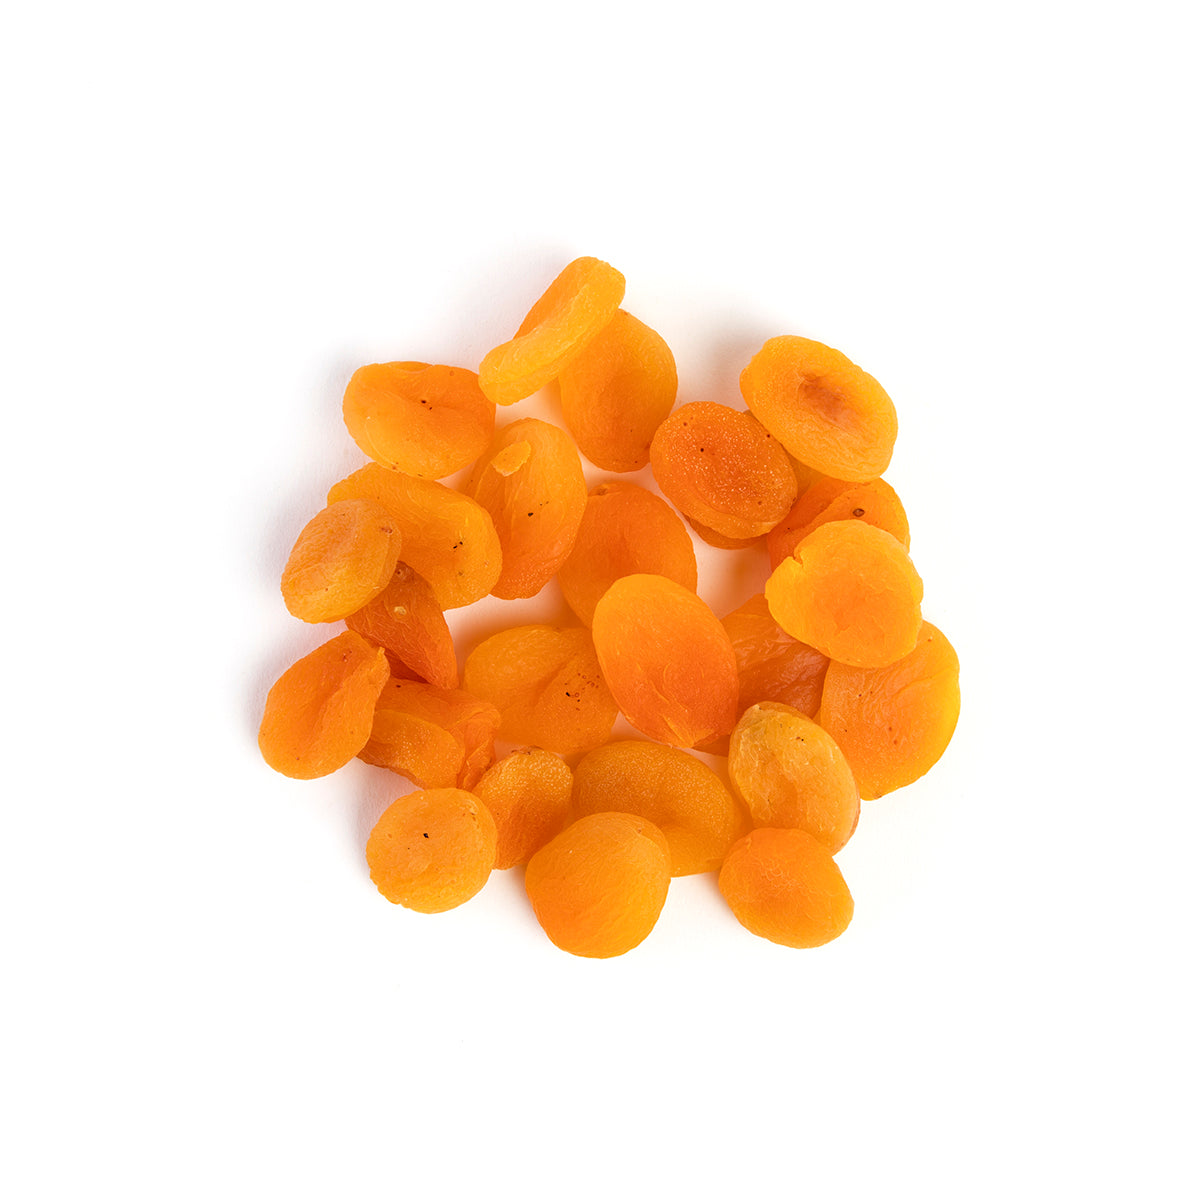 Bazzini Dried Apricots 5 lb